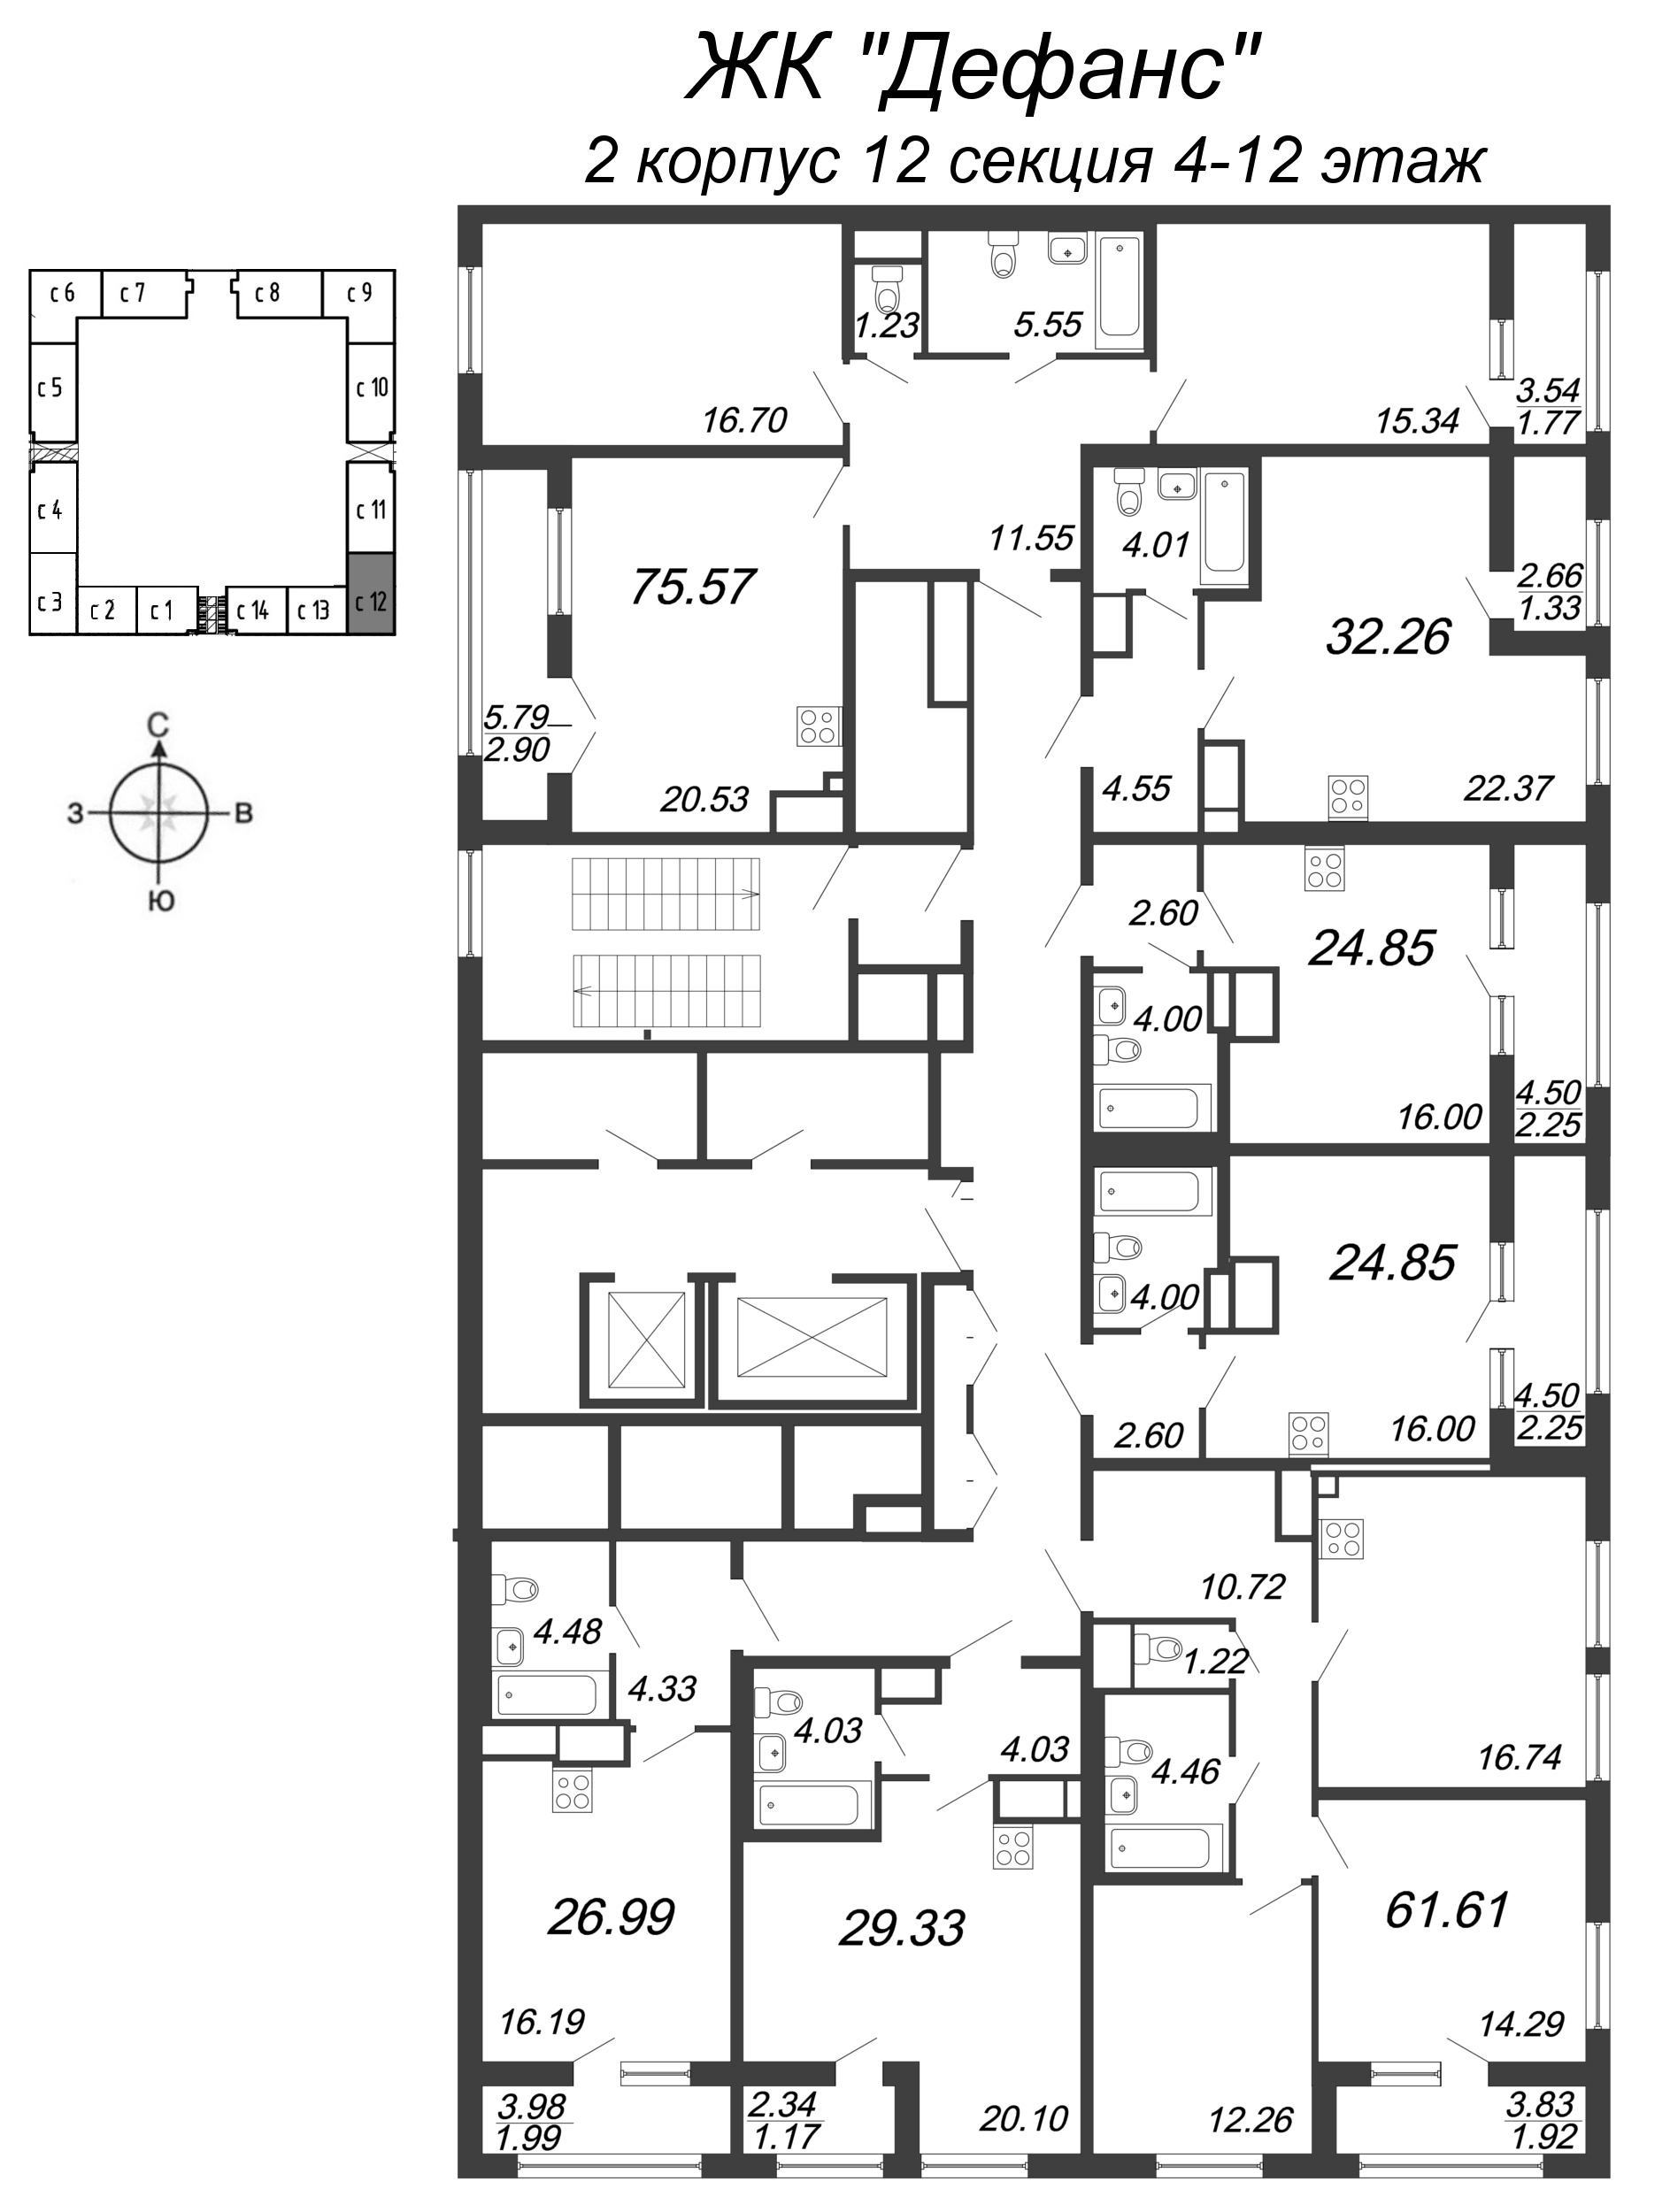 3-комнатная (Евро) квартира, 75.57 м² - планировка этажа